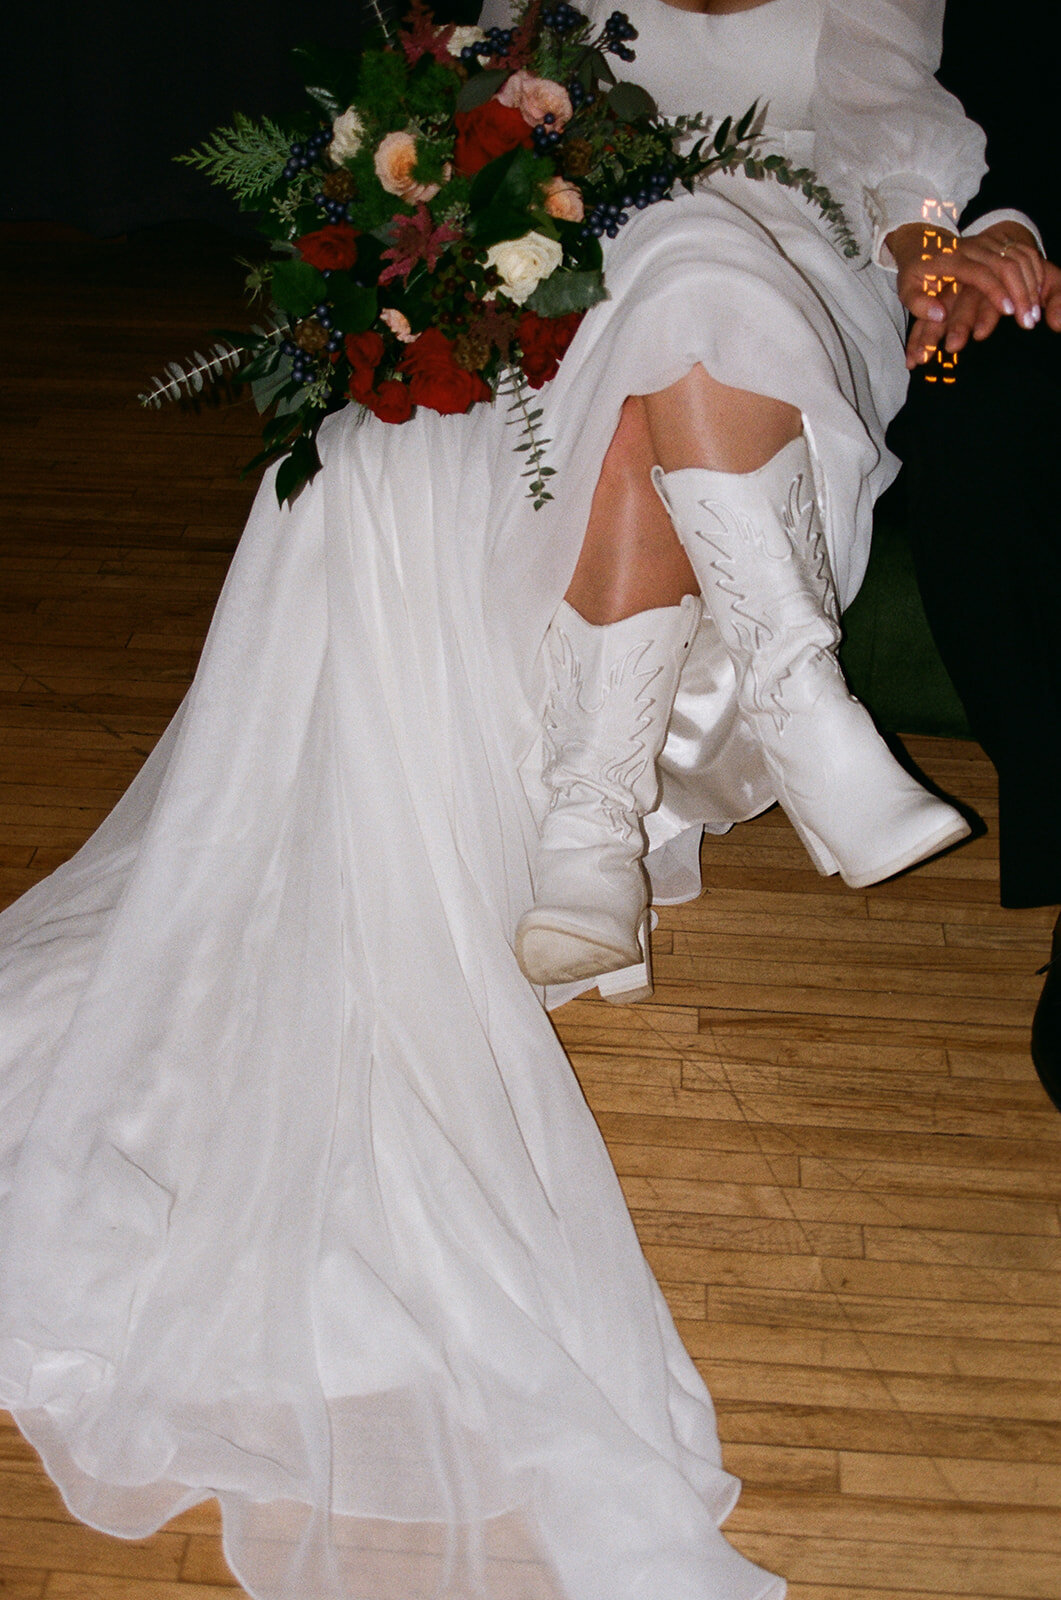 Details of bride's dress, bouquet, and white cowboy boots.